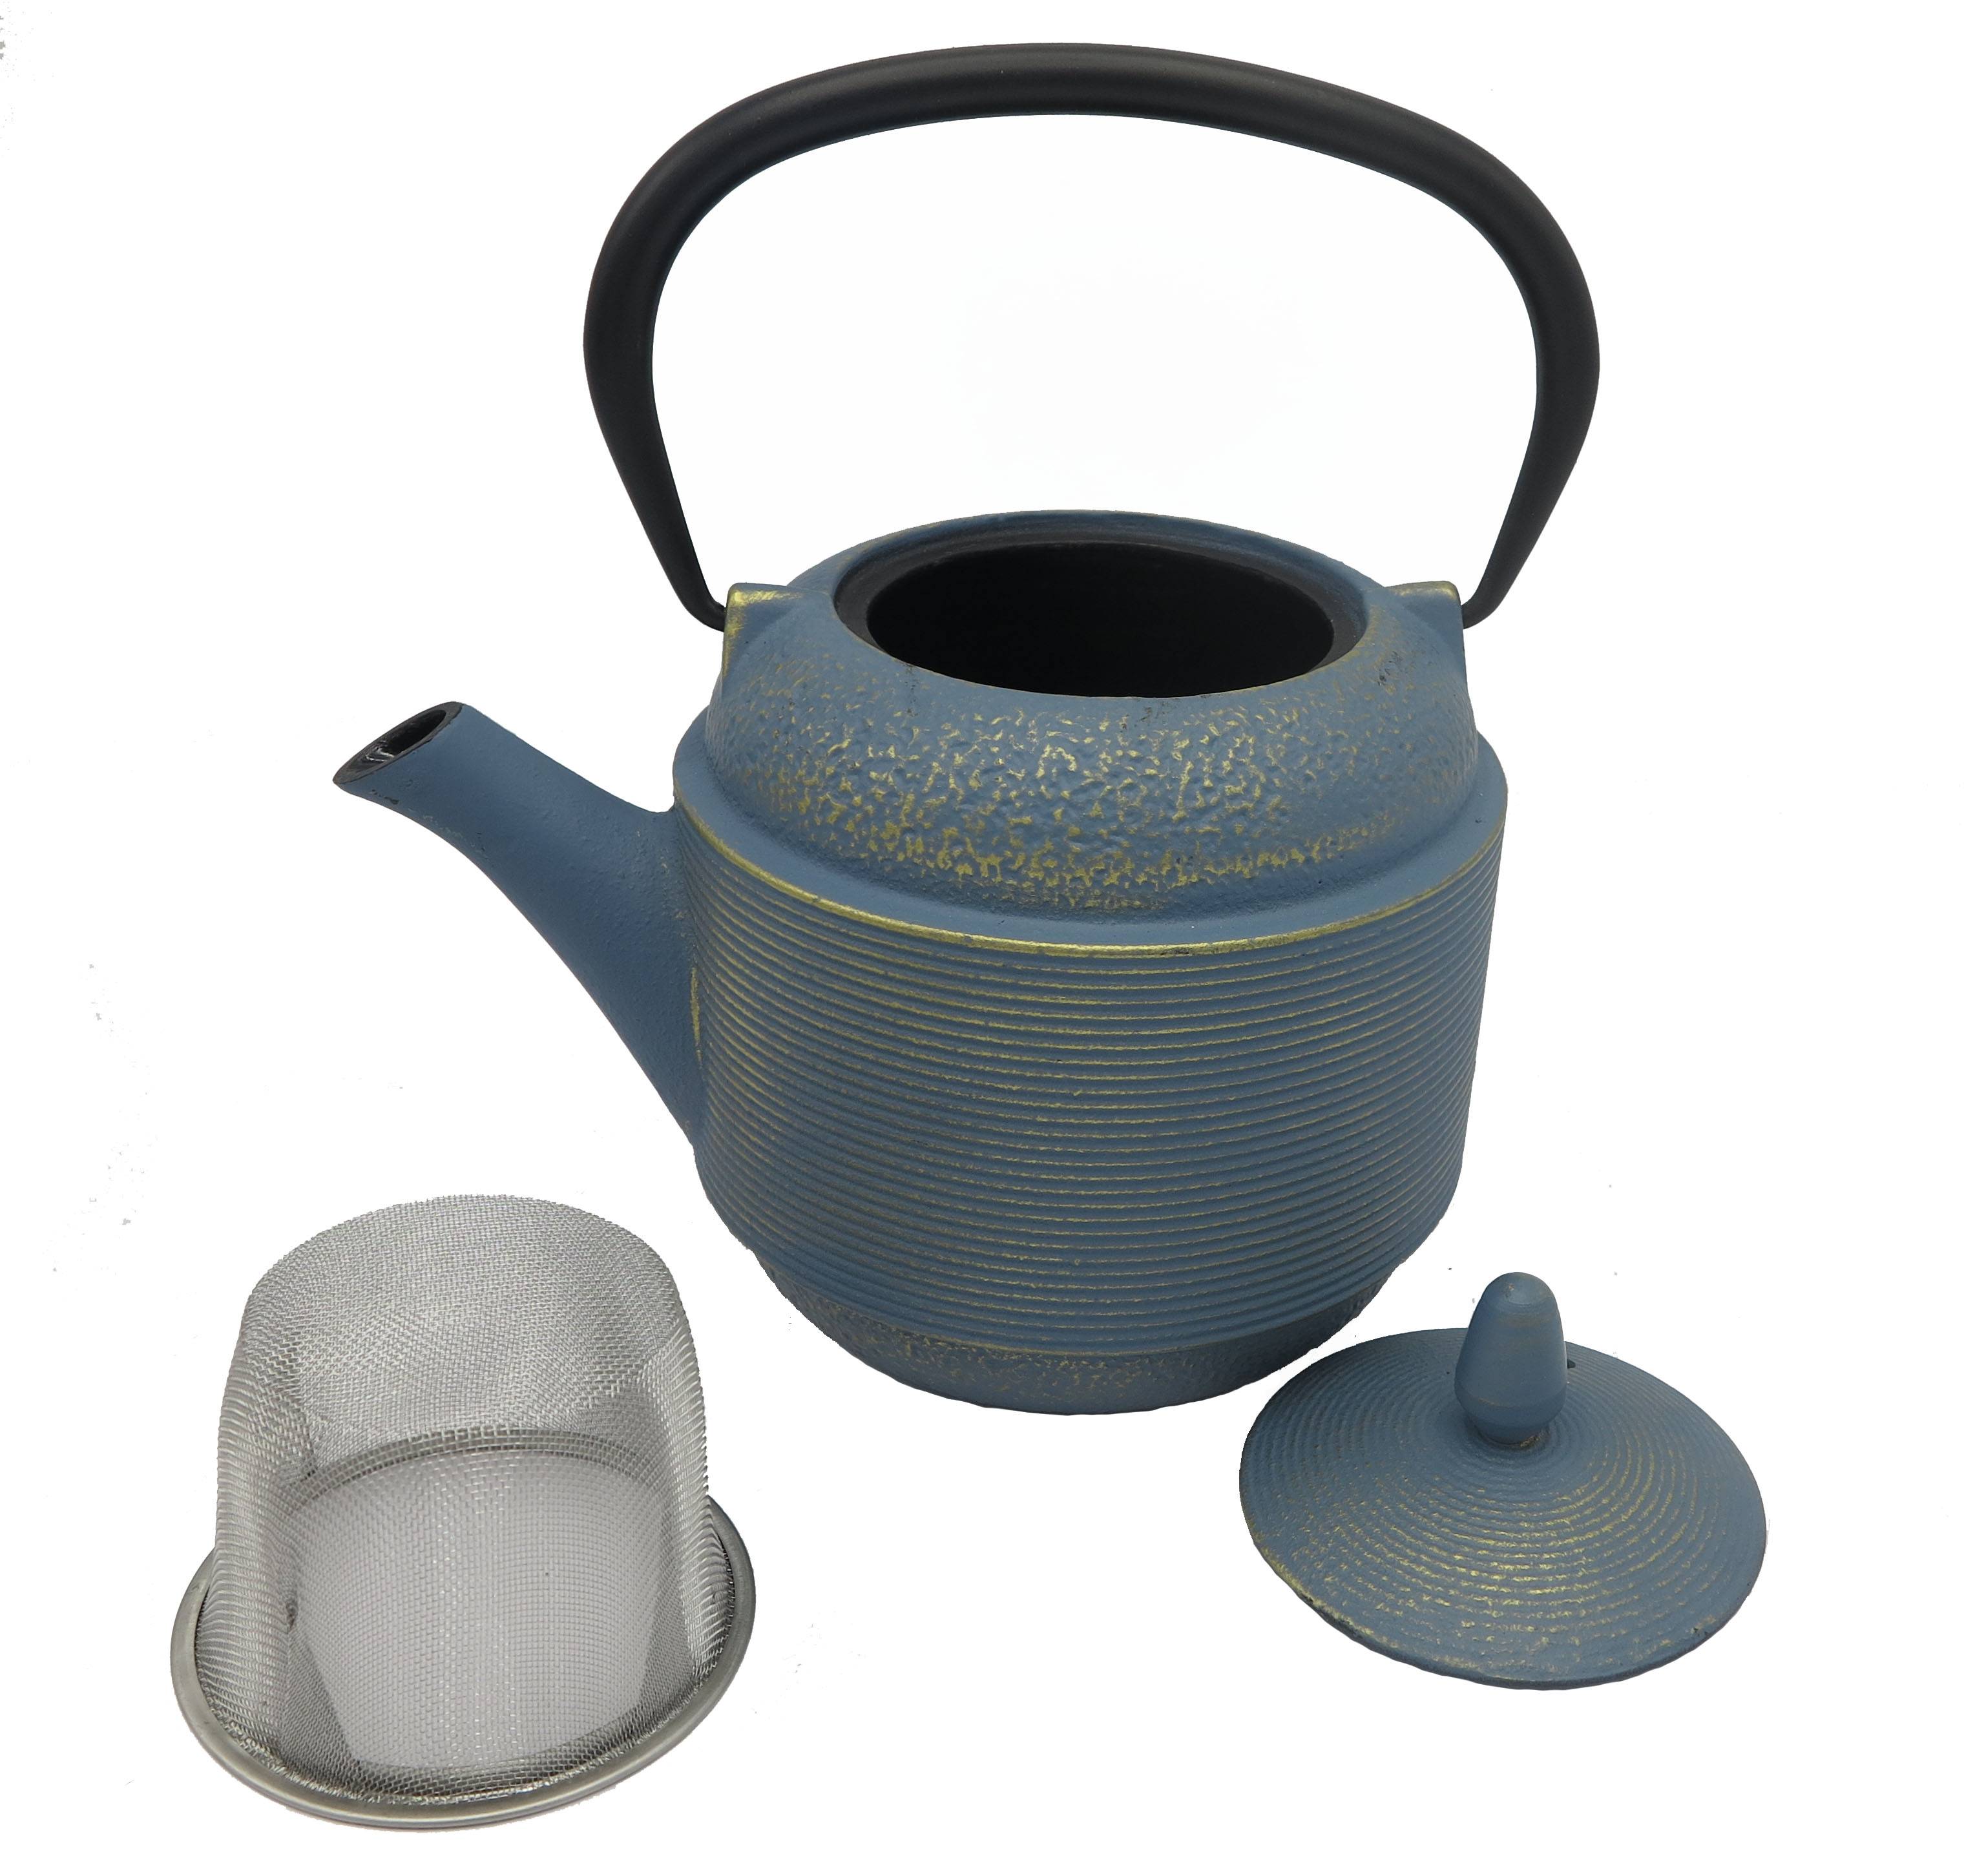 Metal Tea kettle 800ML cast iron enamel coated teapot